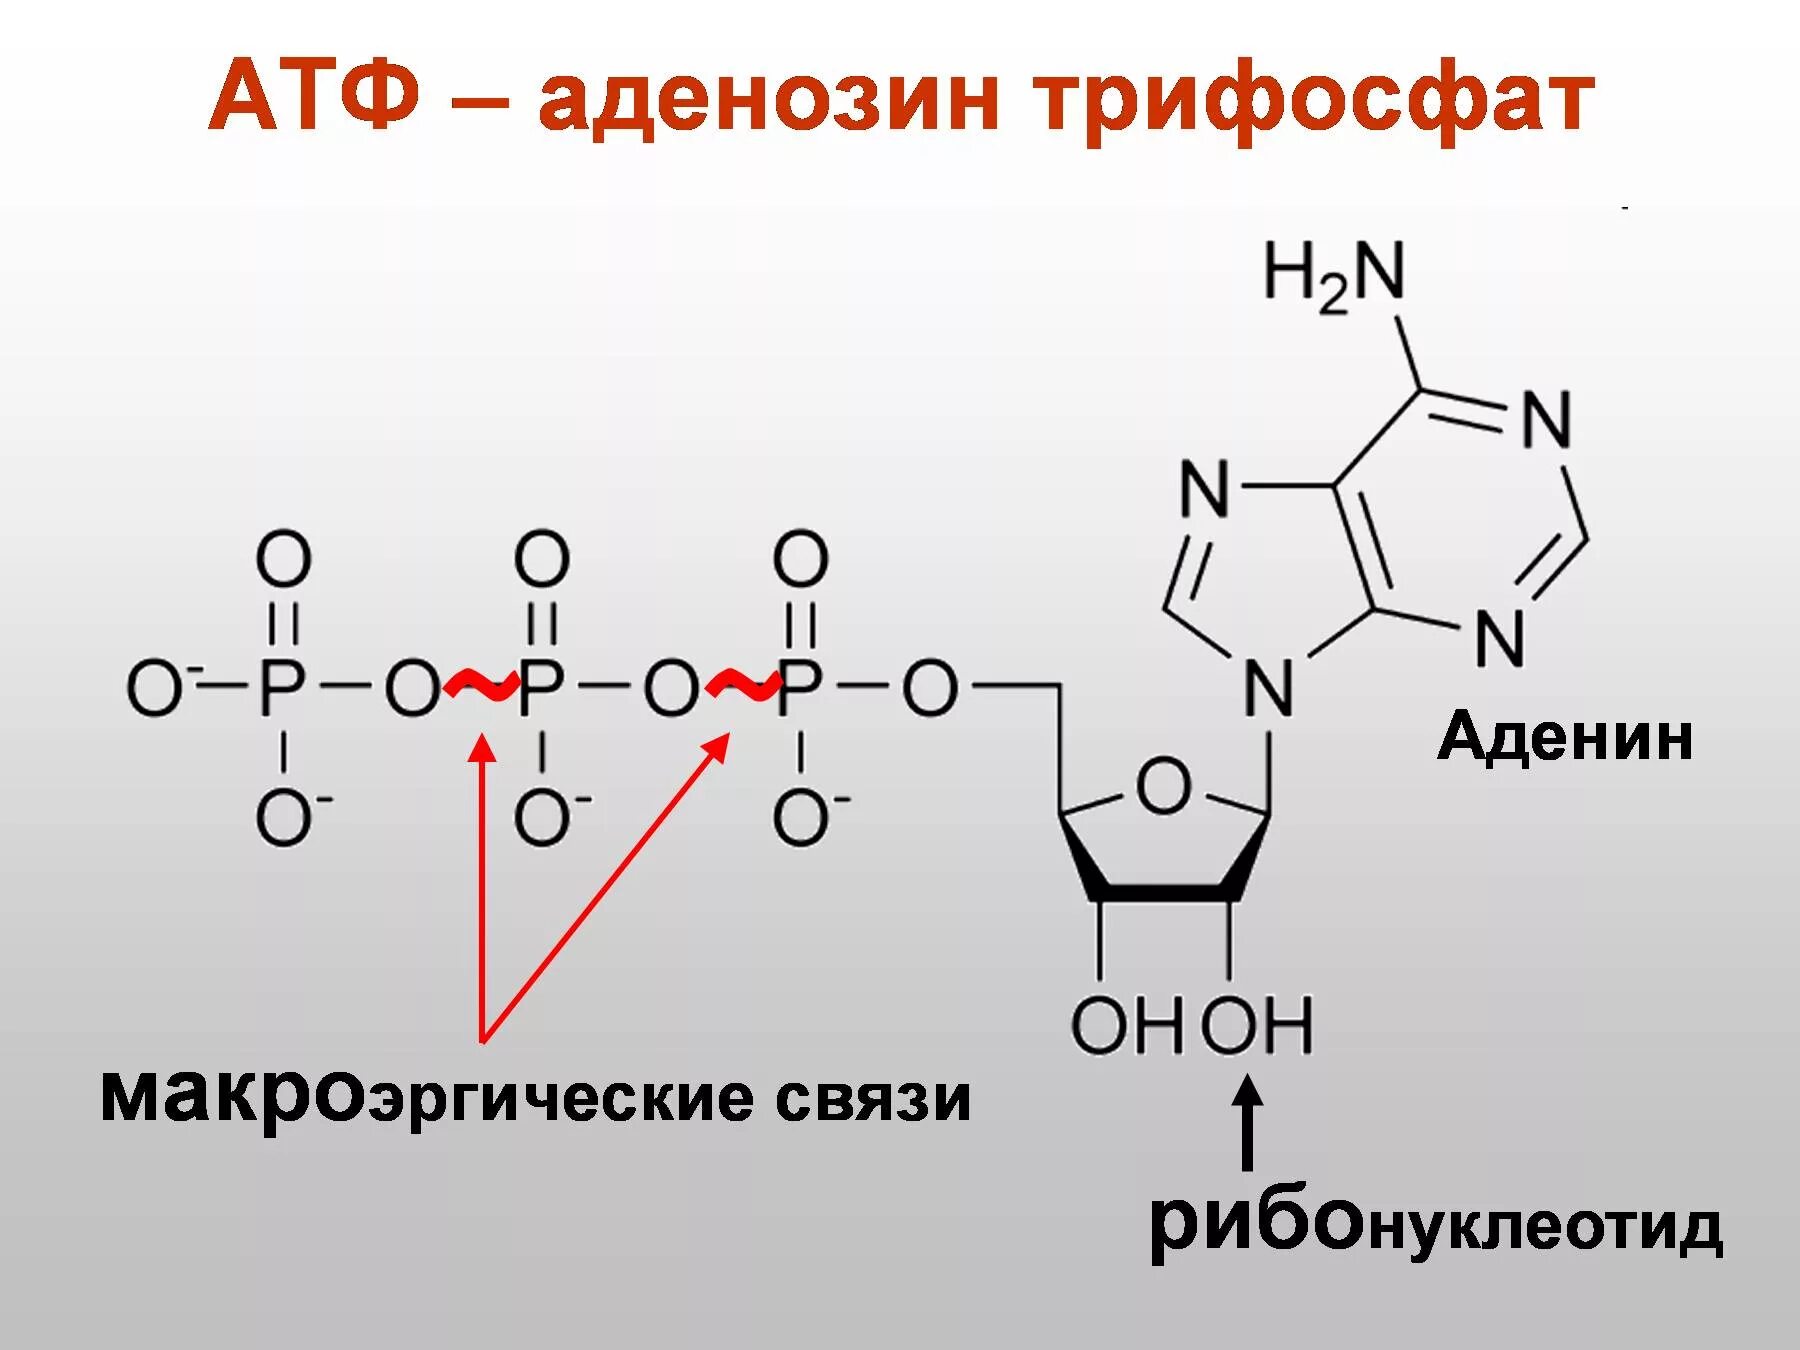 3 части атф. Схема строения АТФ. Аденозин 5 трифосфат. Аденозин 5 трифосфат строение. Реакции образования АТФ (аденозин-5-трифосфата.